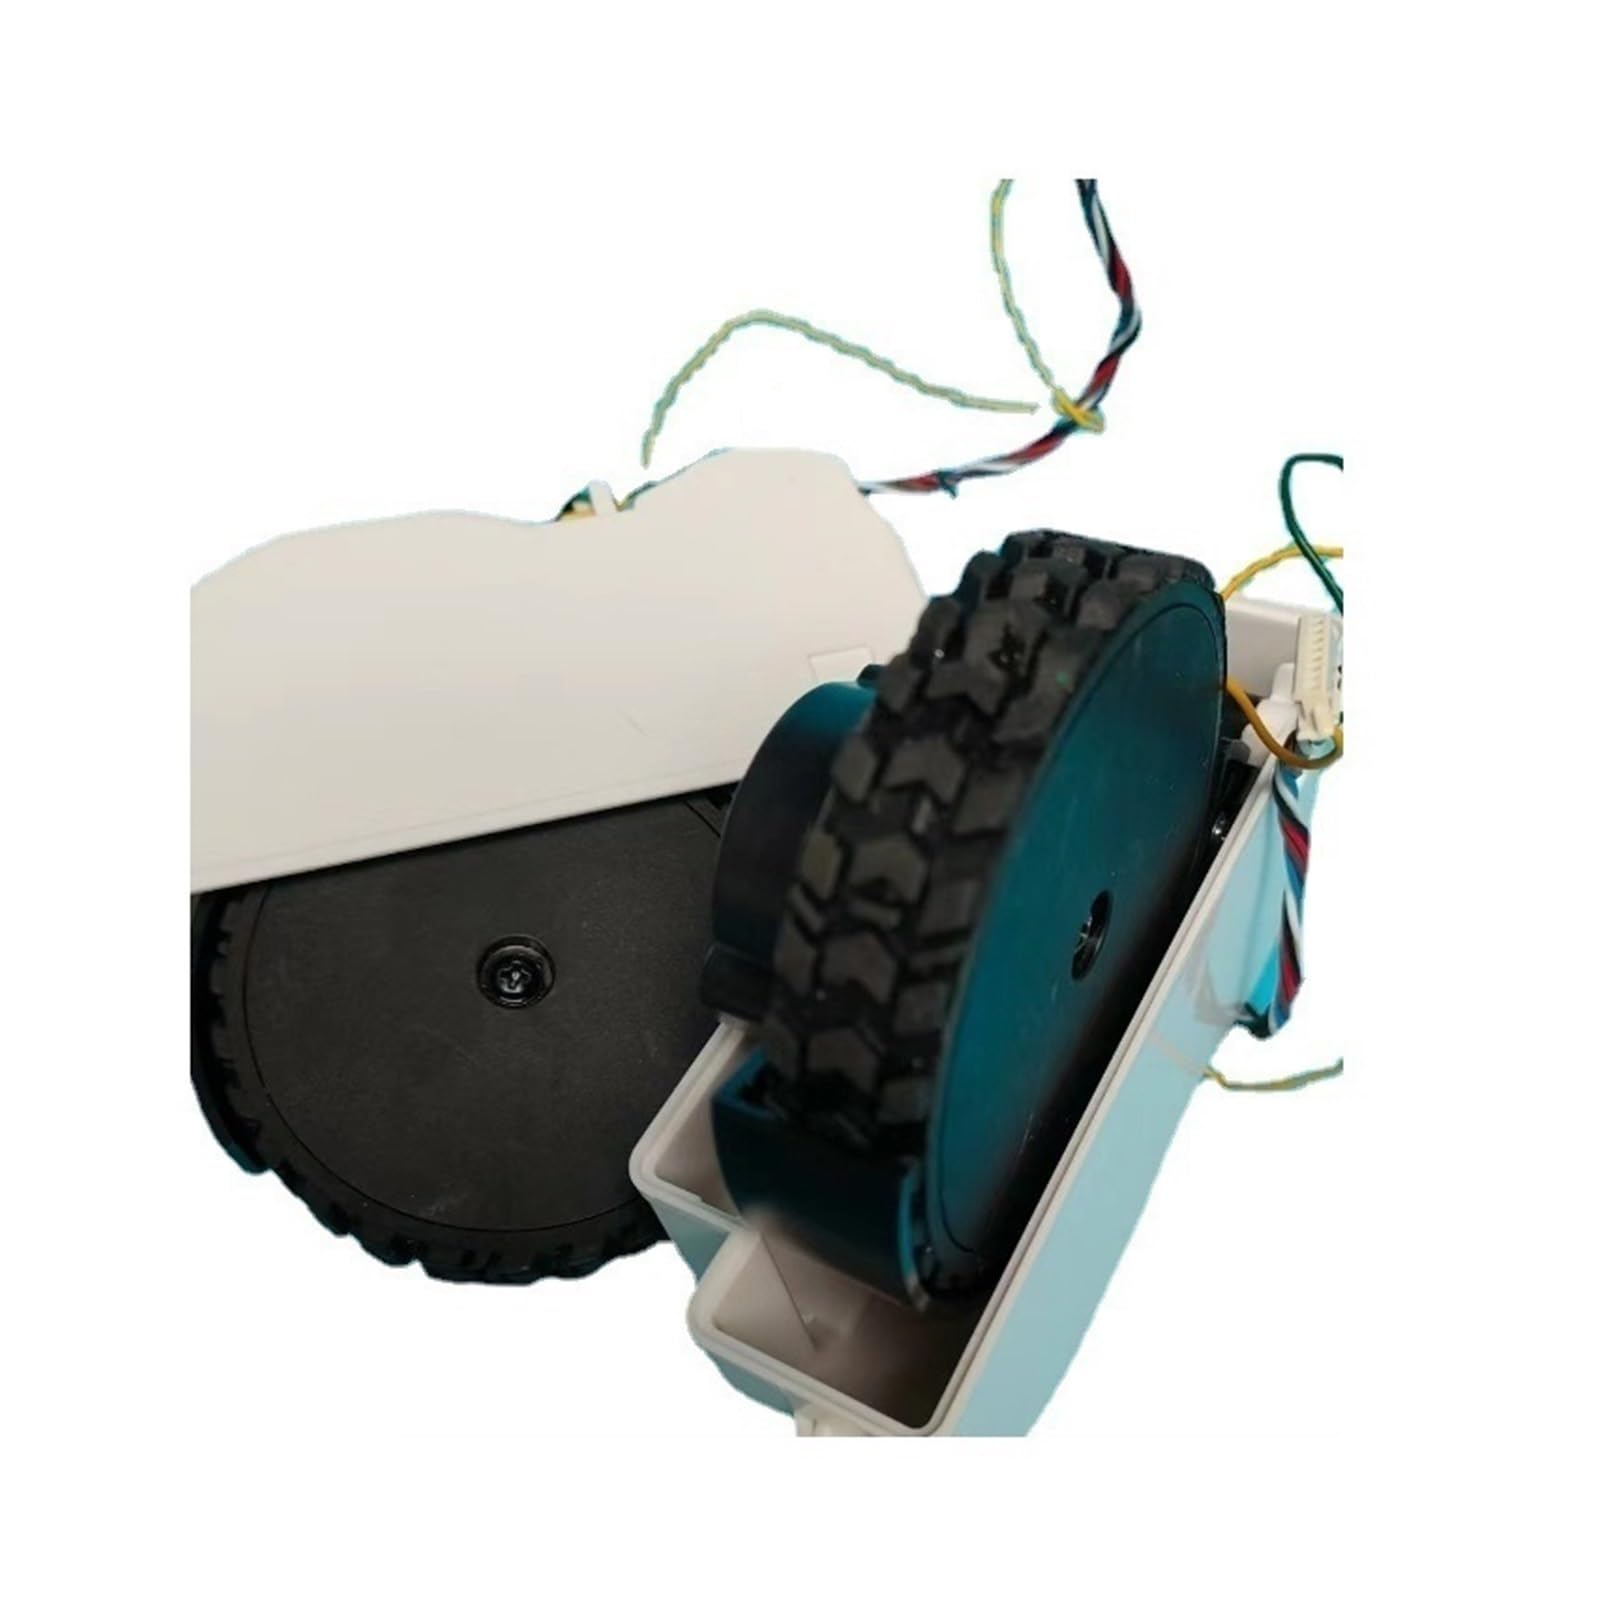 Rad, kompatibel for Eufy, kompatibel for Robovac L70 Hybrid-Zubehör, Roboter-Staubsauger-Ersatzteile, Räder for Anker, kompatibel for Eufy, kompatibel for Robovac L70-Zubehör (Color : Left and right von RuuTe